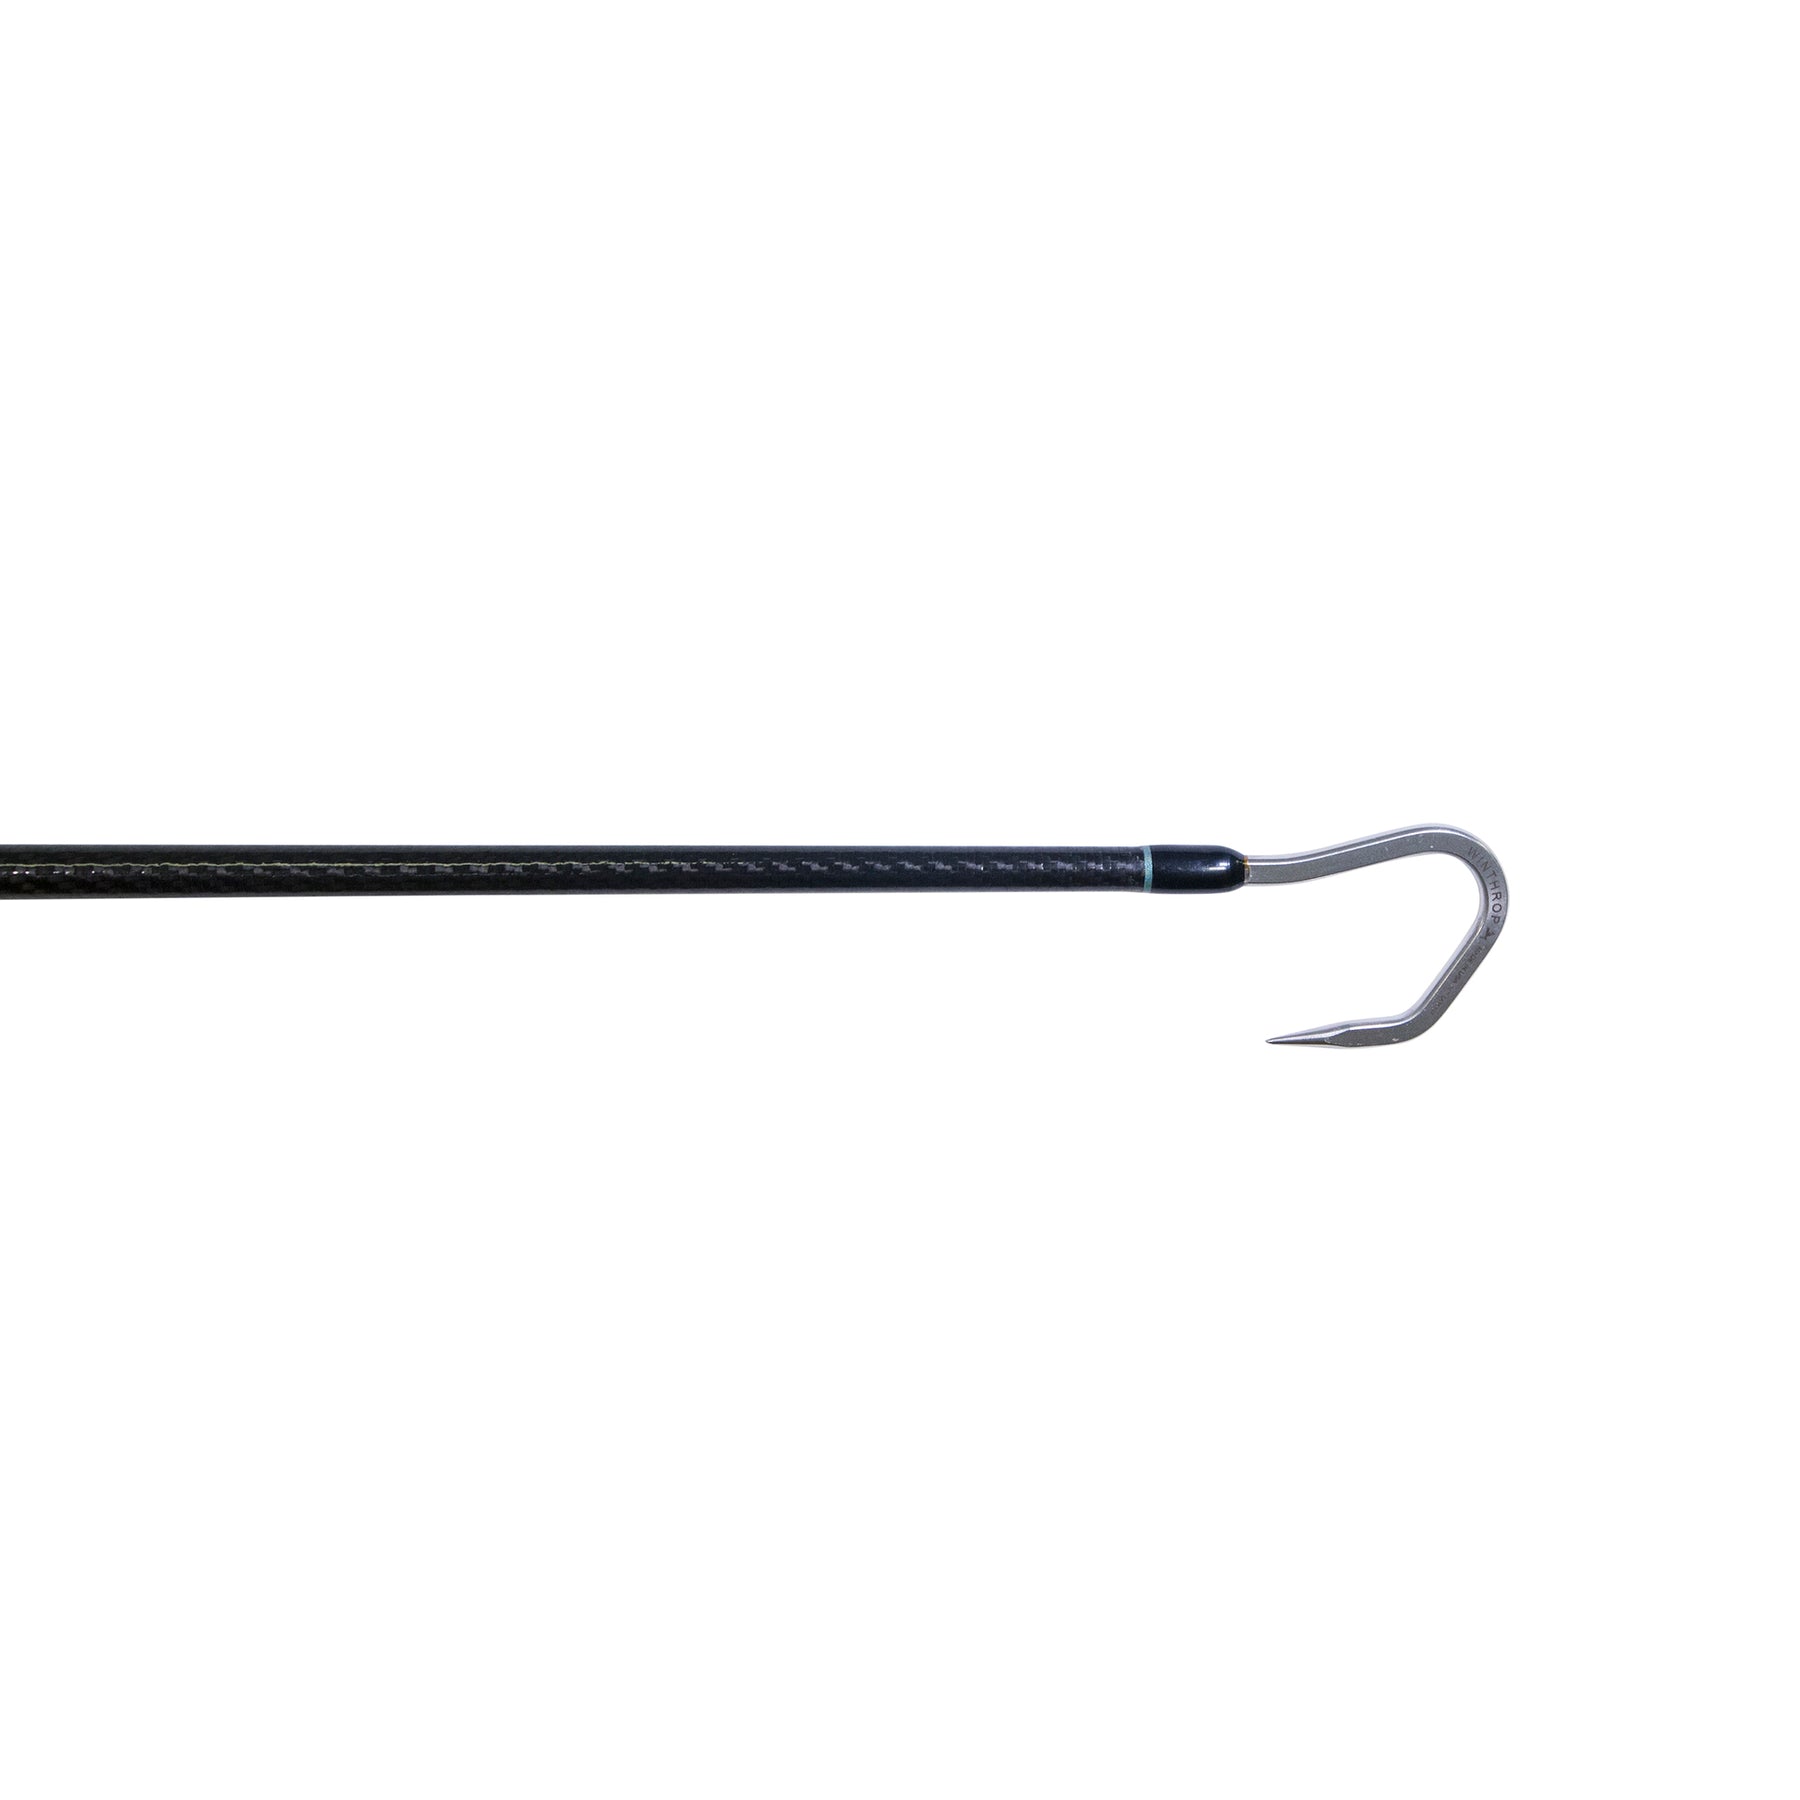 BlacktipH Gaff Stainless Steel Winthrop Hook - 2